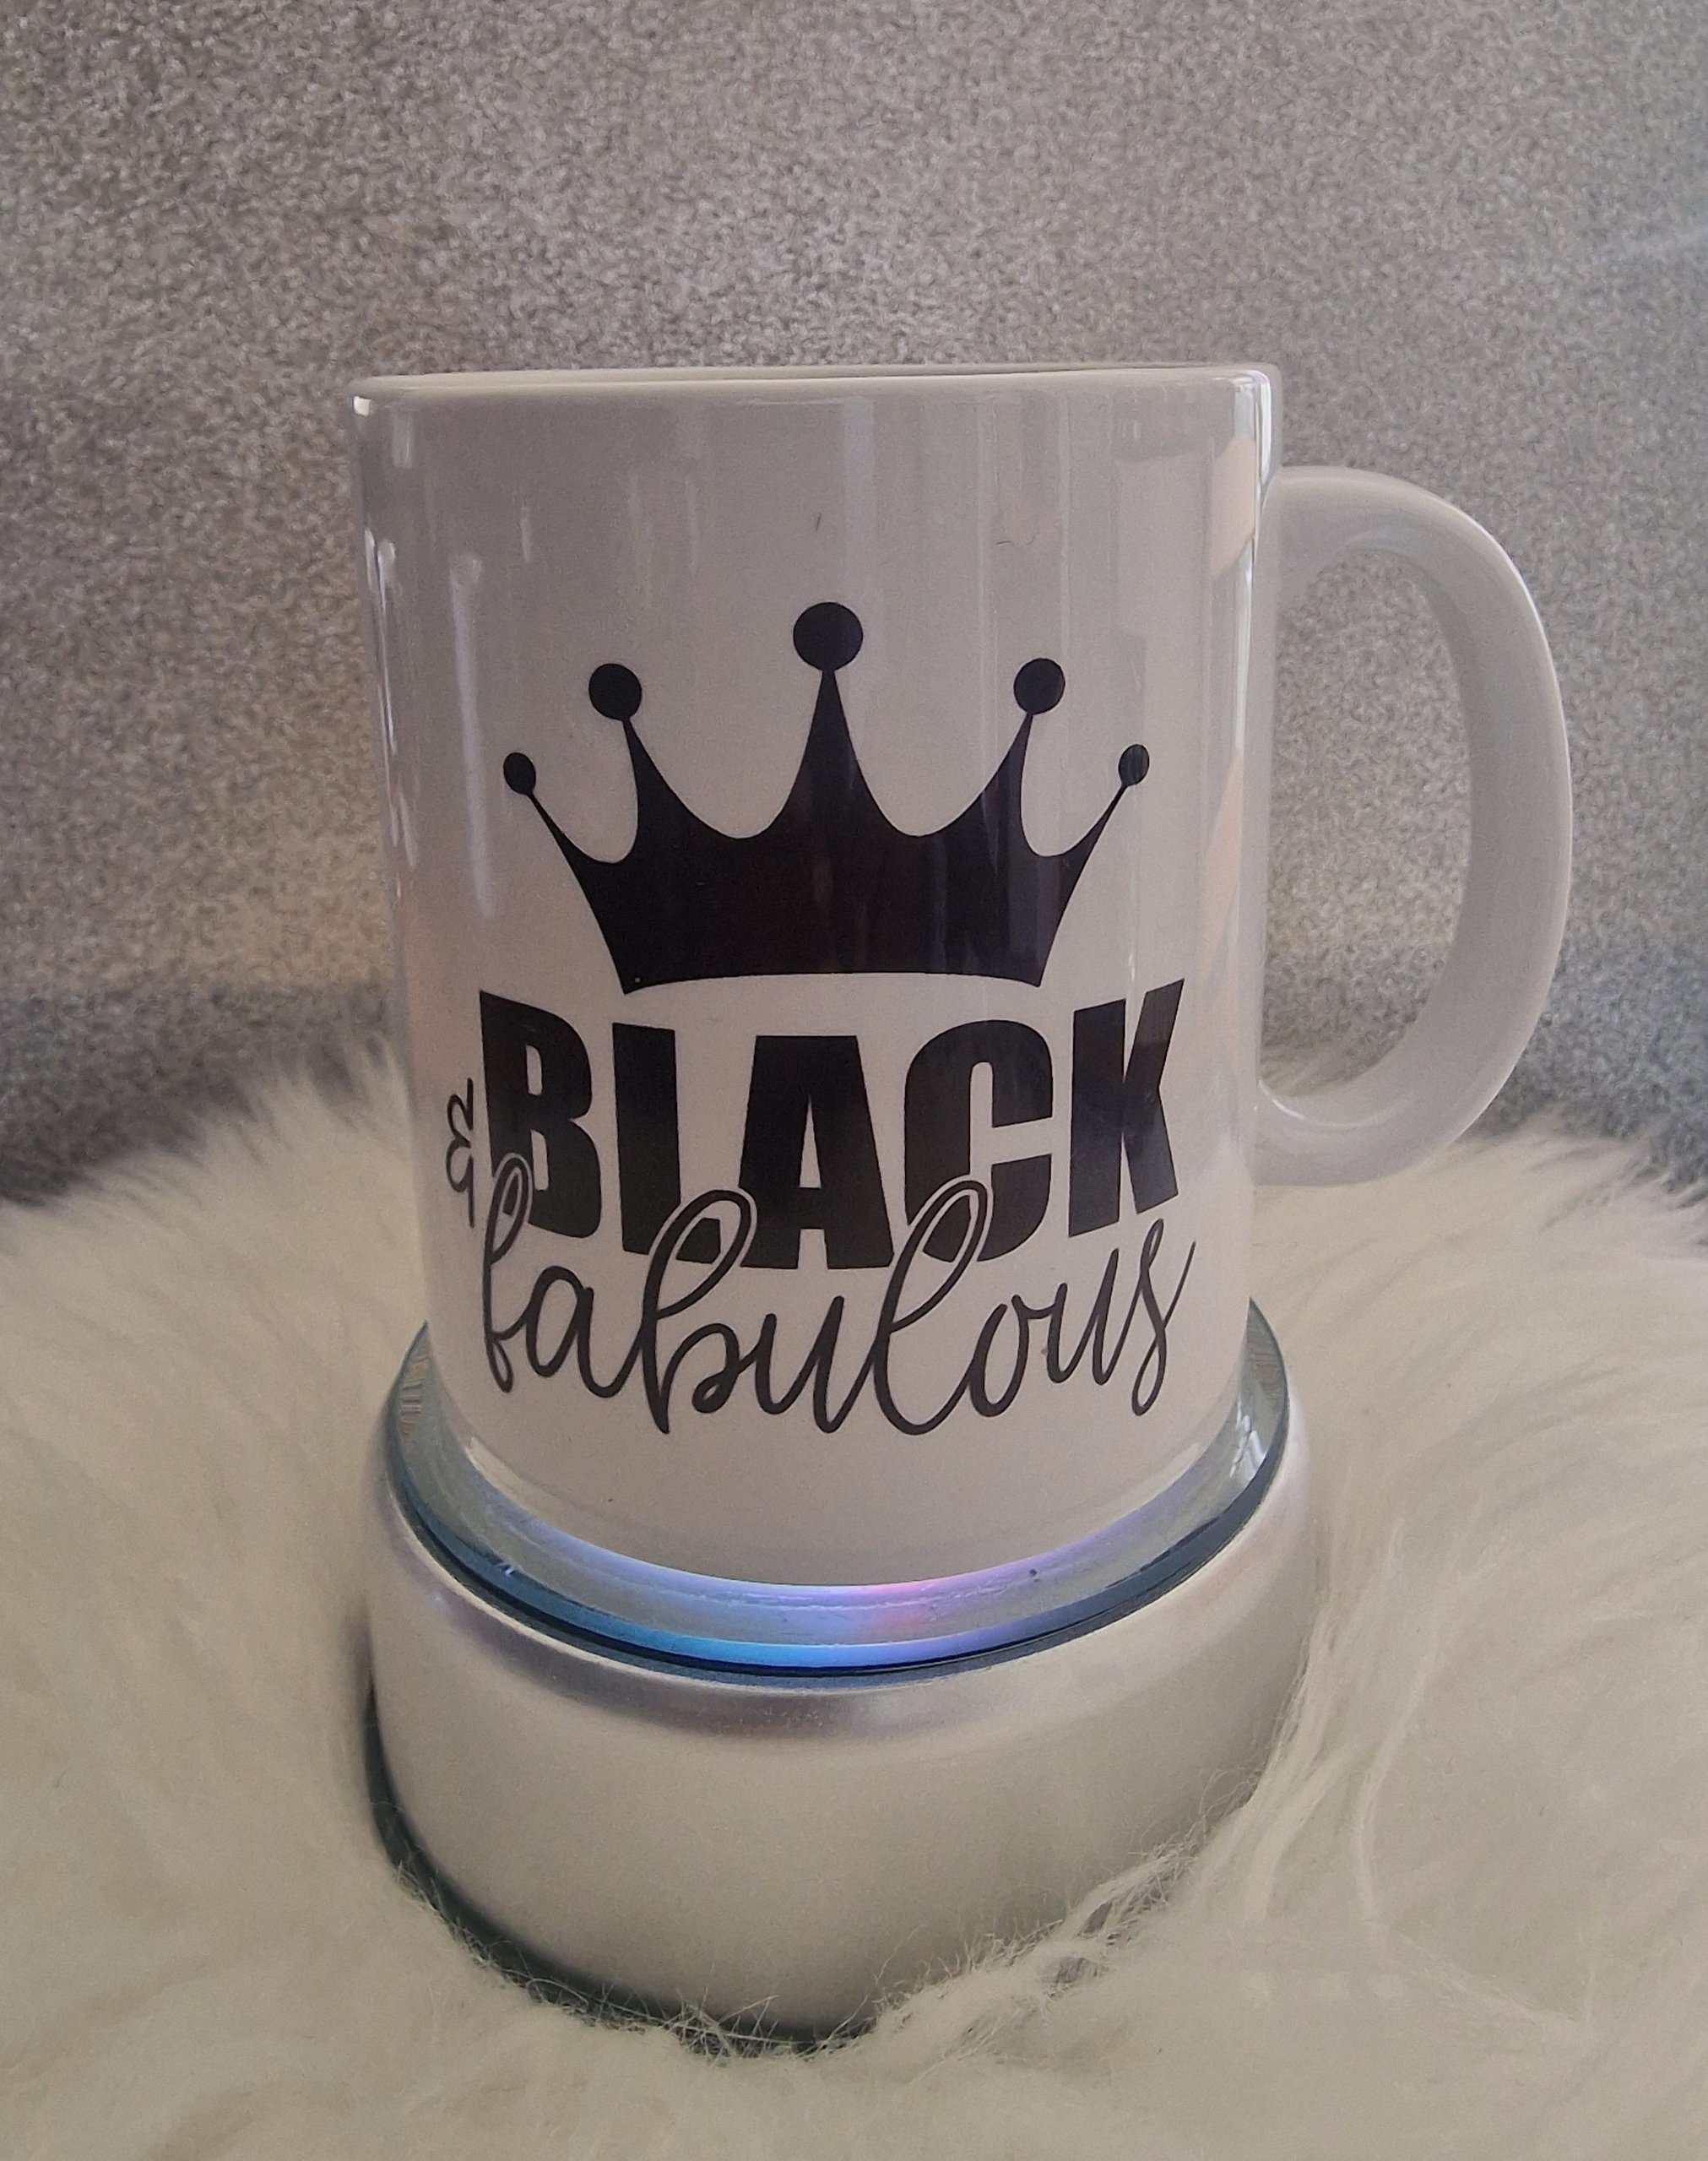 Black fabulous mug